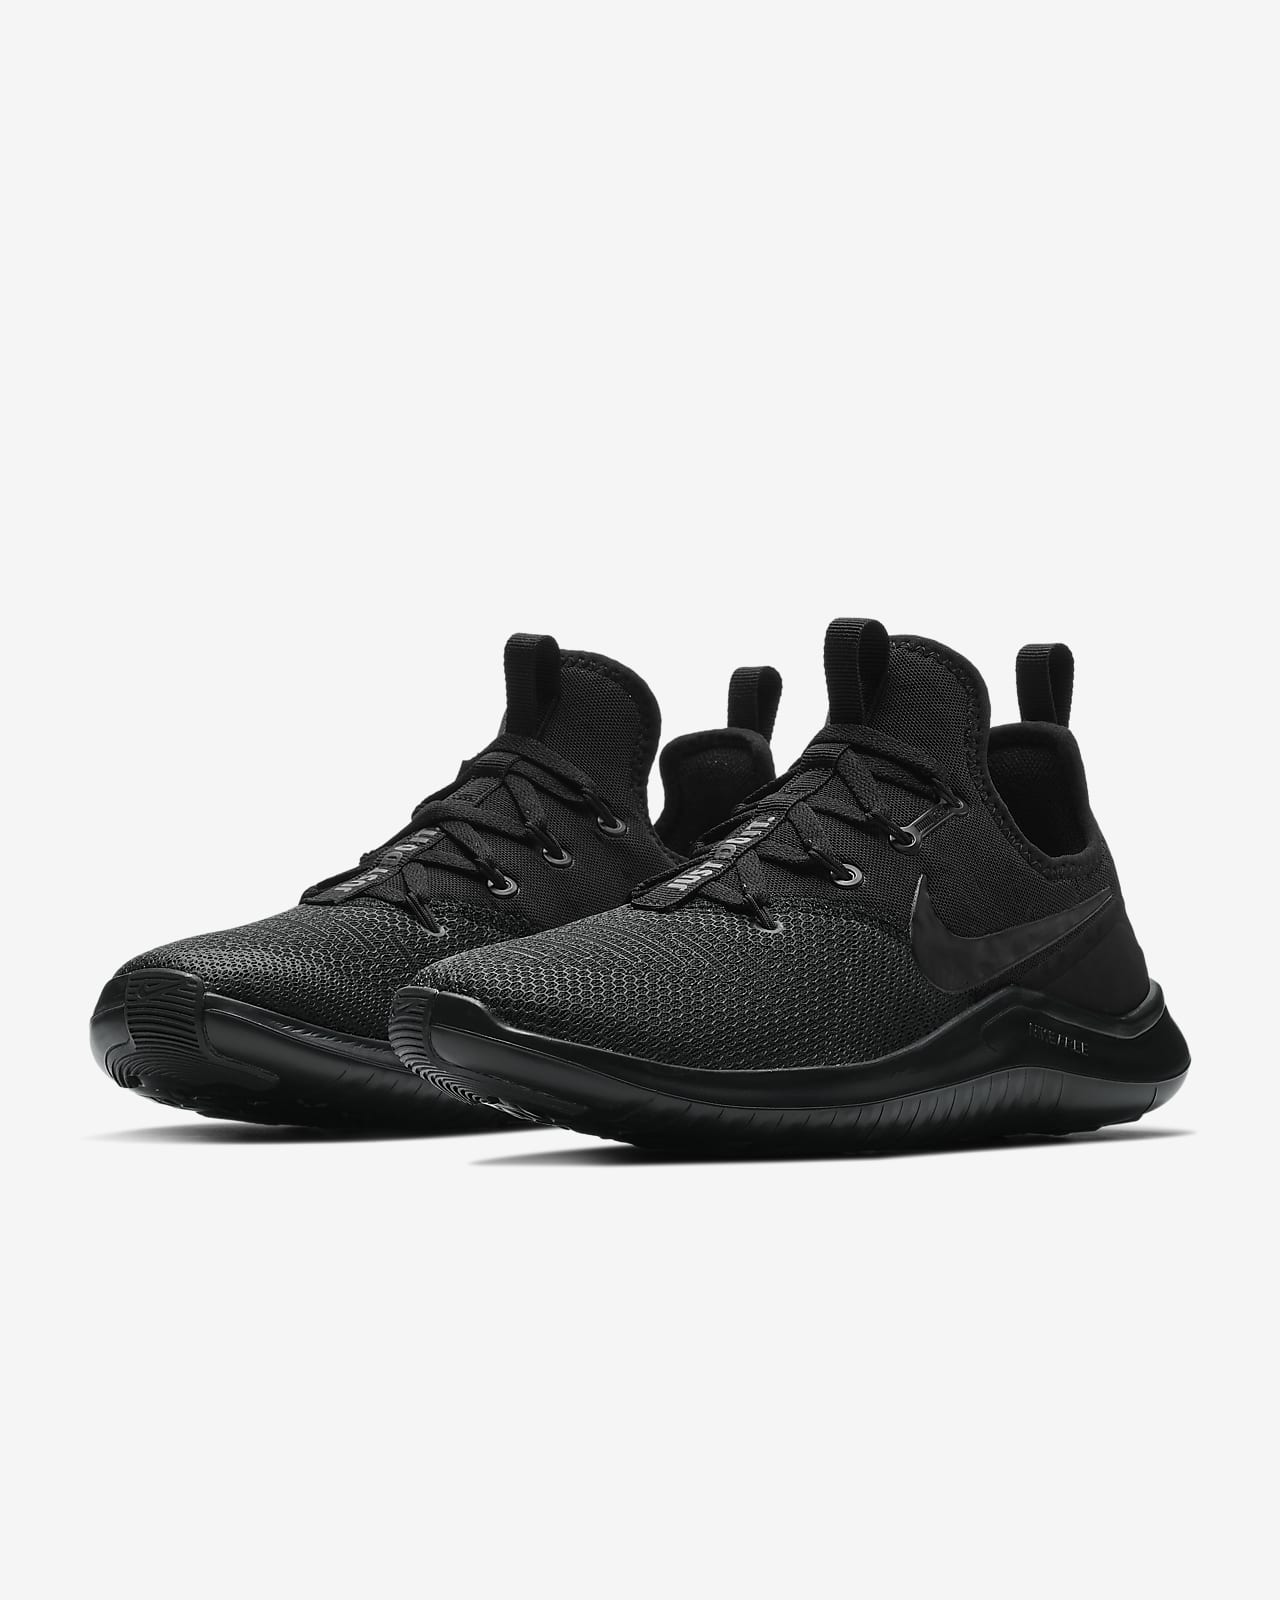 black nike training shoes